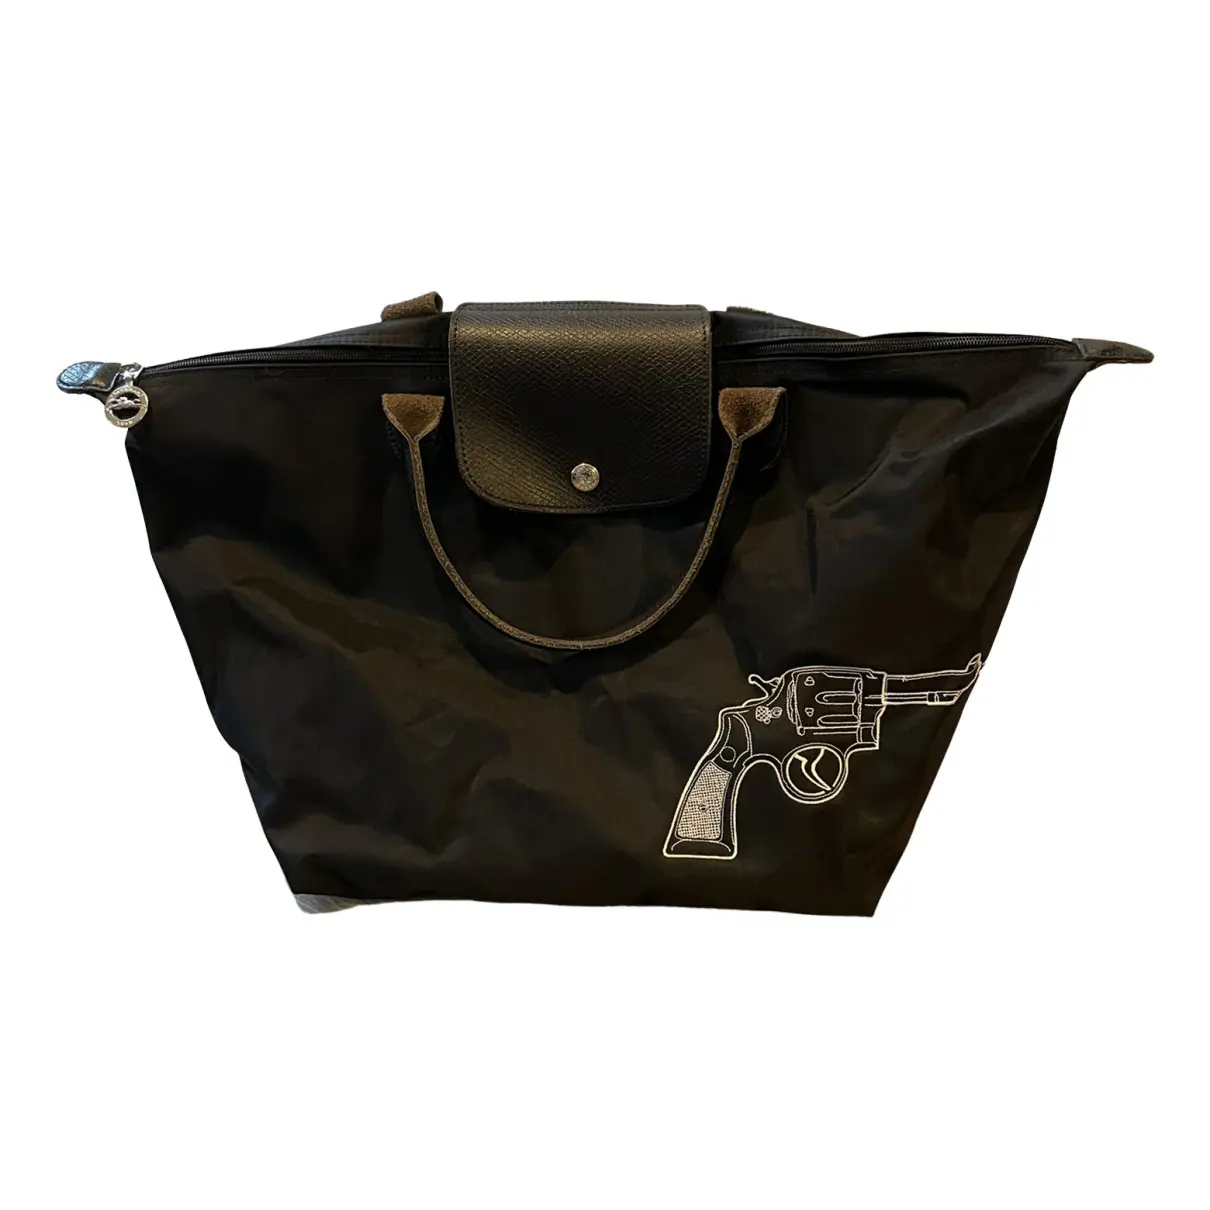 Pliage leather handbag Longchamp